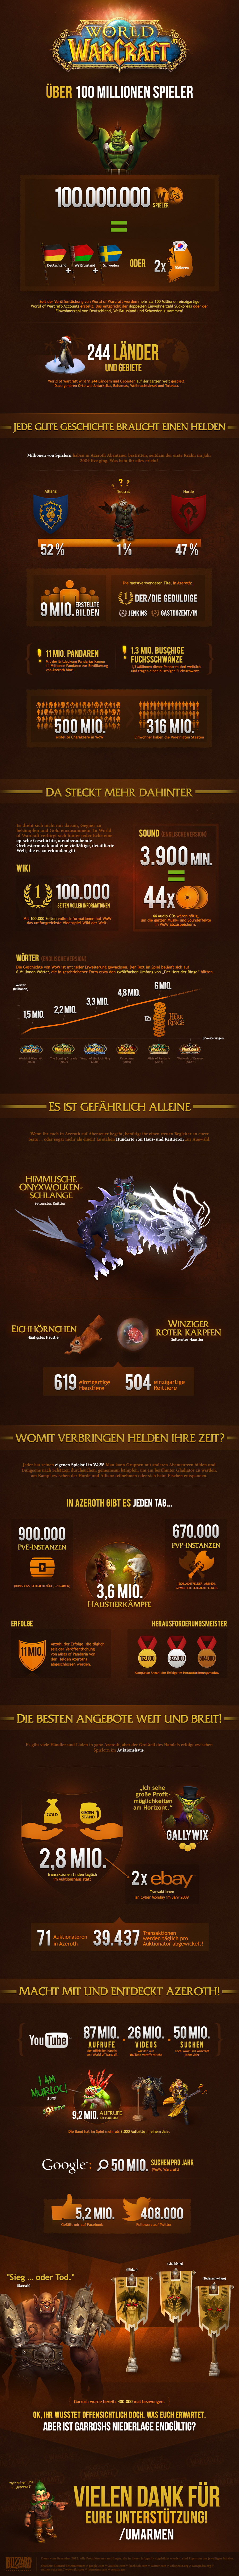 World of Warcraft: Infografik - Blizzard Entertainment